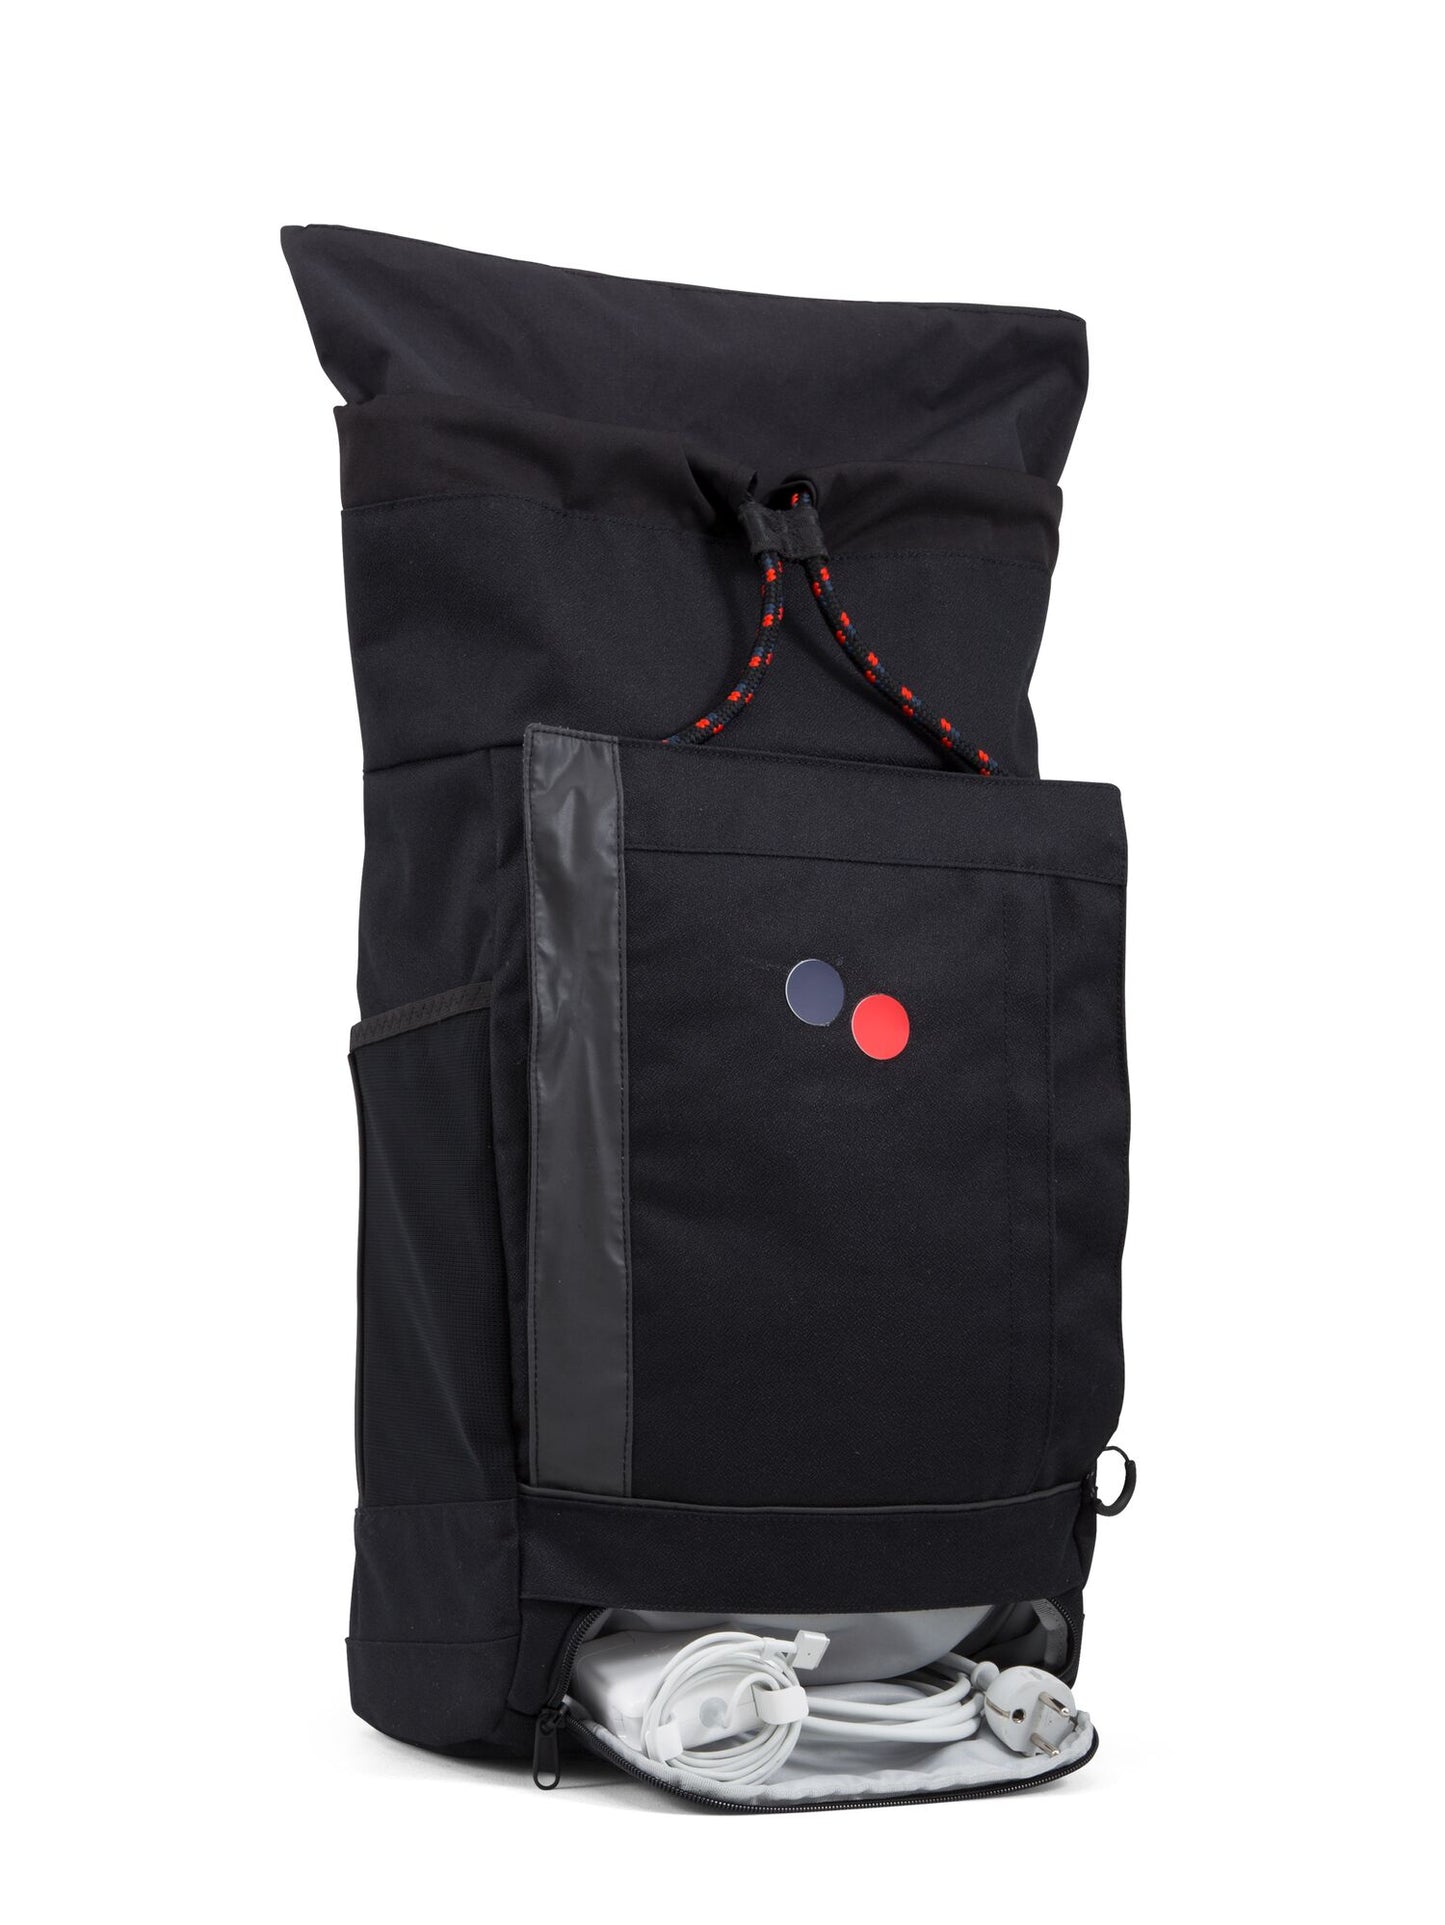 pinqponq-backpack-Blok-Medium-Licorice-Black-detail